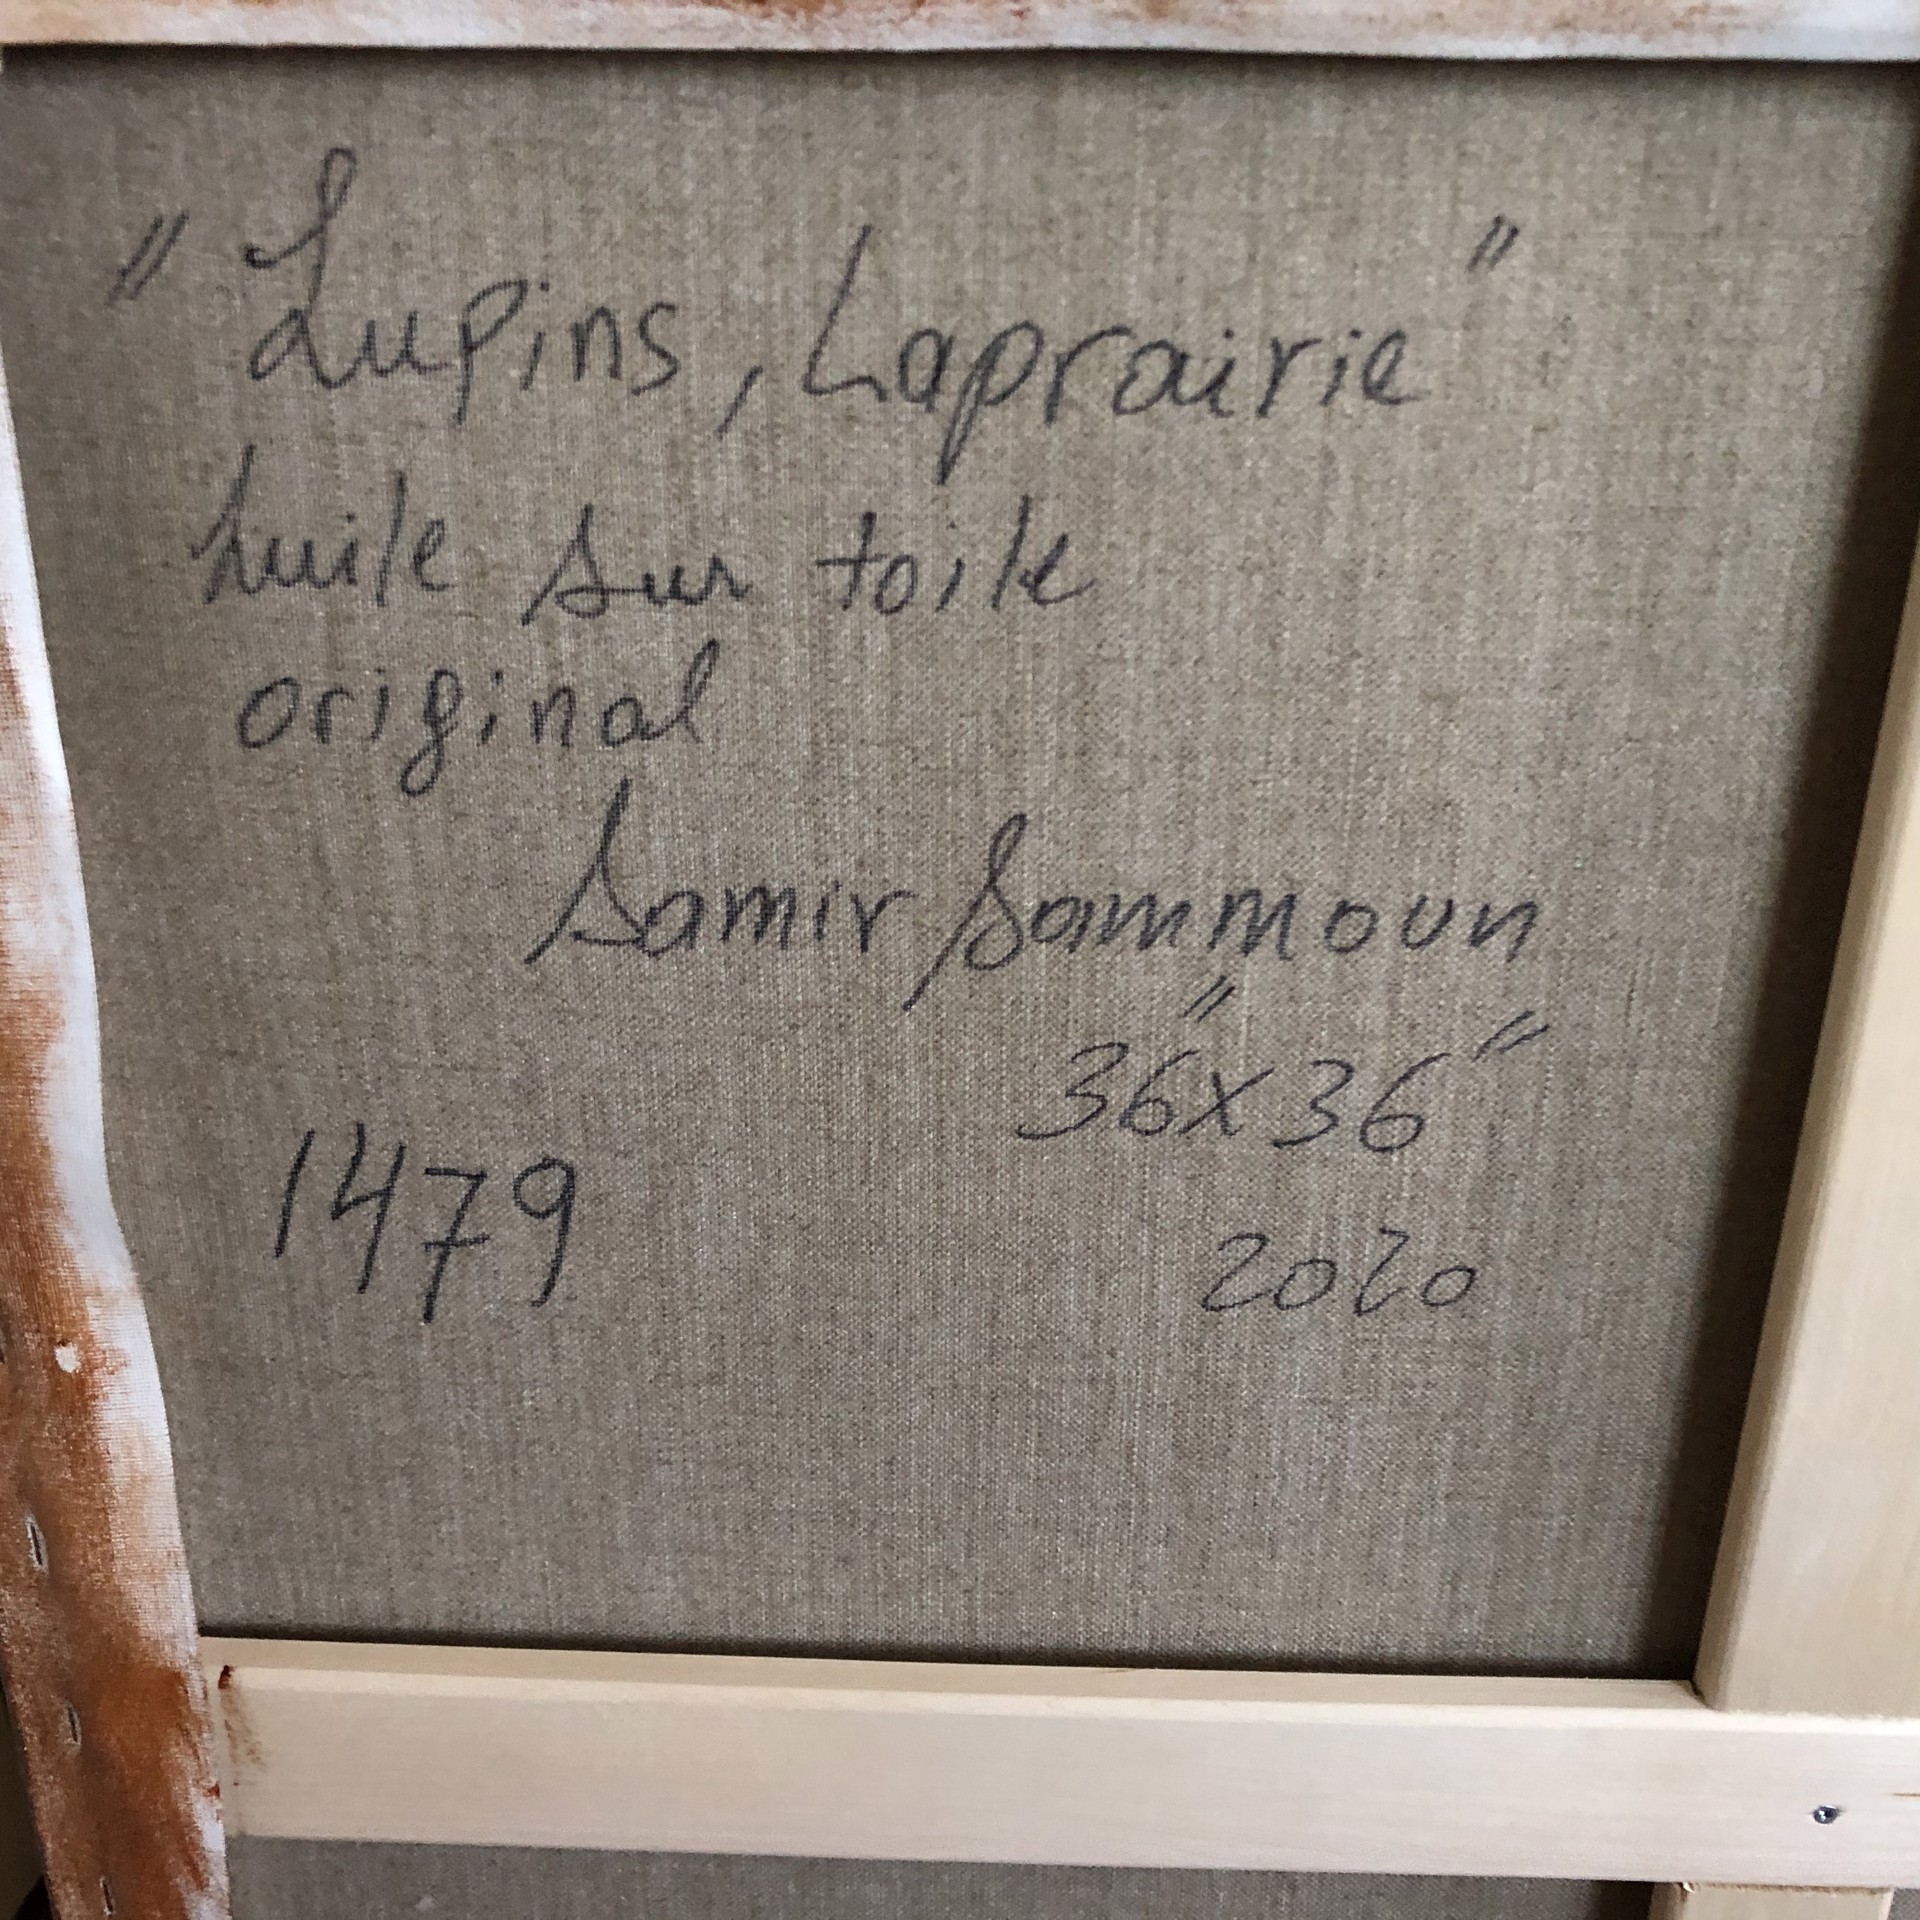 Lupins, Laprairie by Samir Sammoun